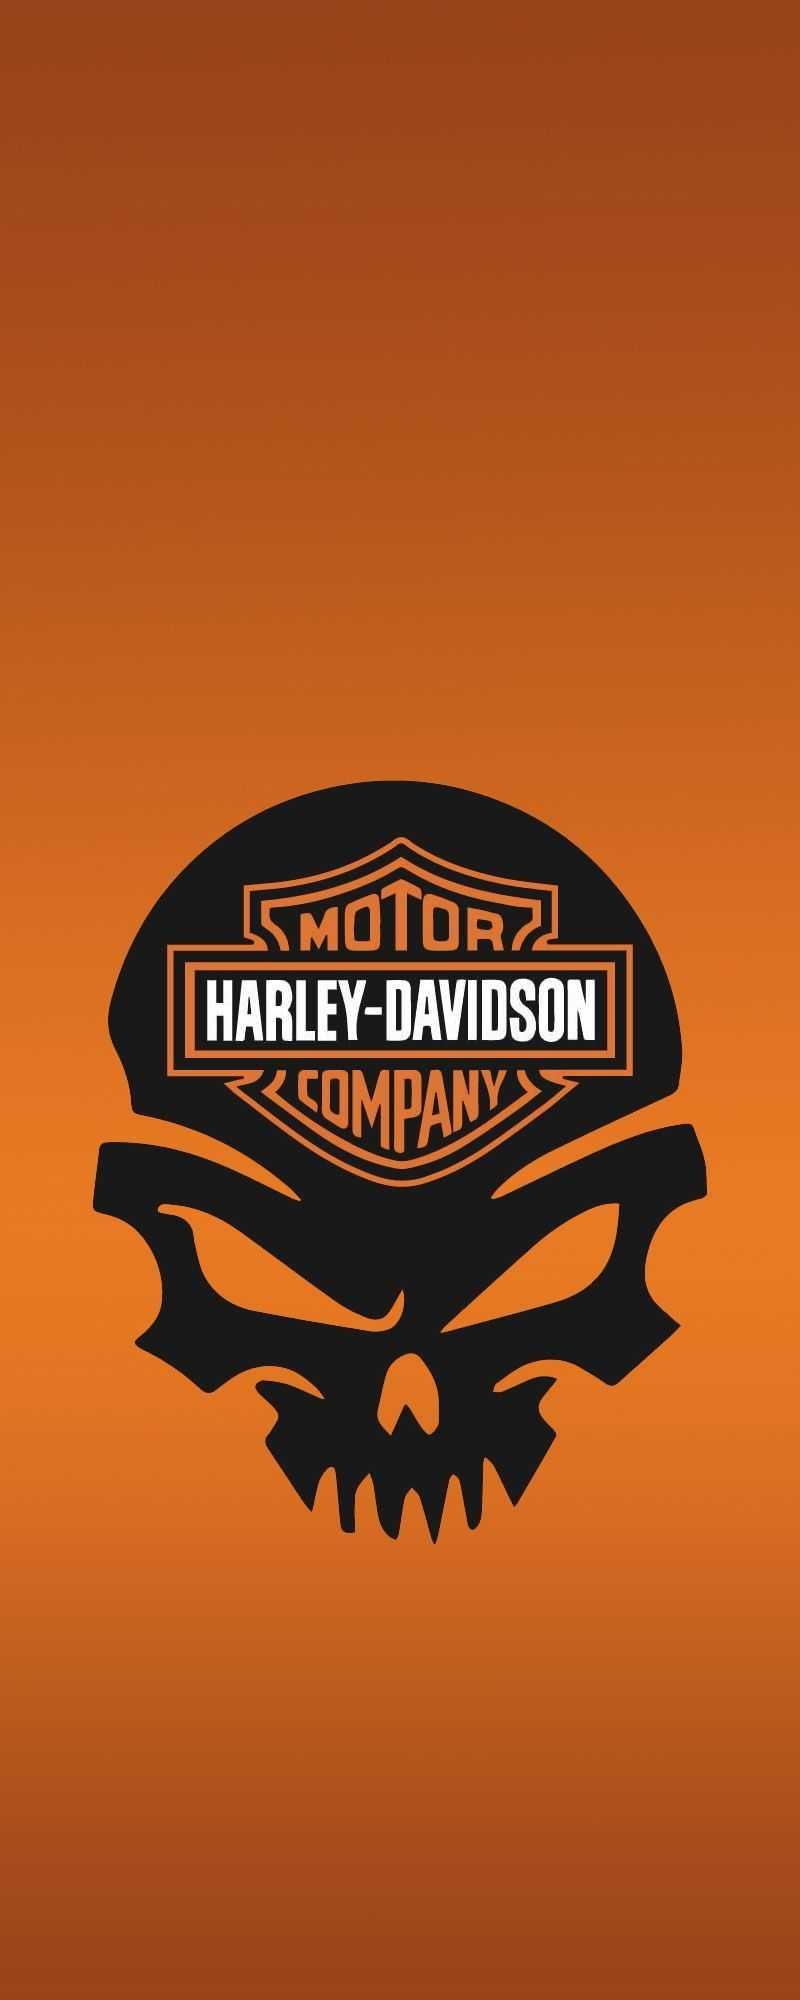 Harley Davidson Wallpaper Browse Harley Davidson Wallpaper with collections of Bike,. Harley davidson wallpaper, Harley davidson artwork, Harley davidson stickers